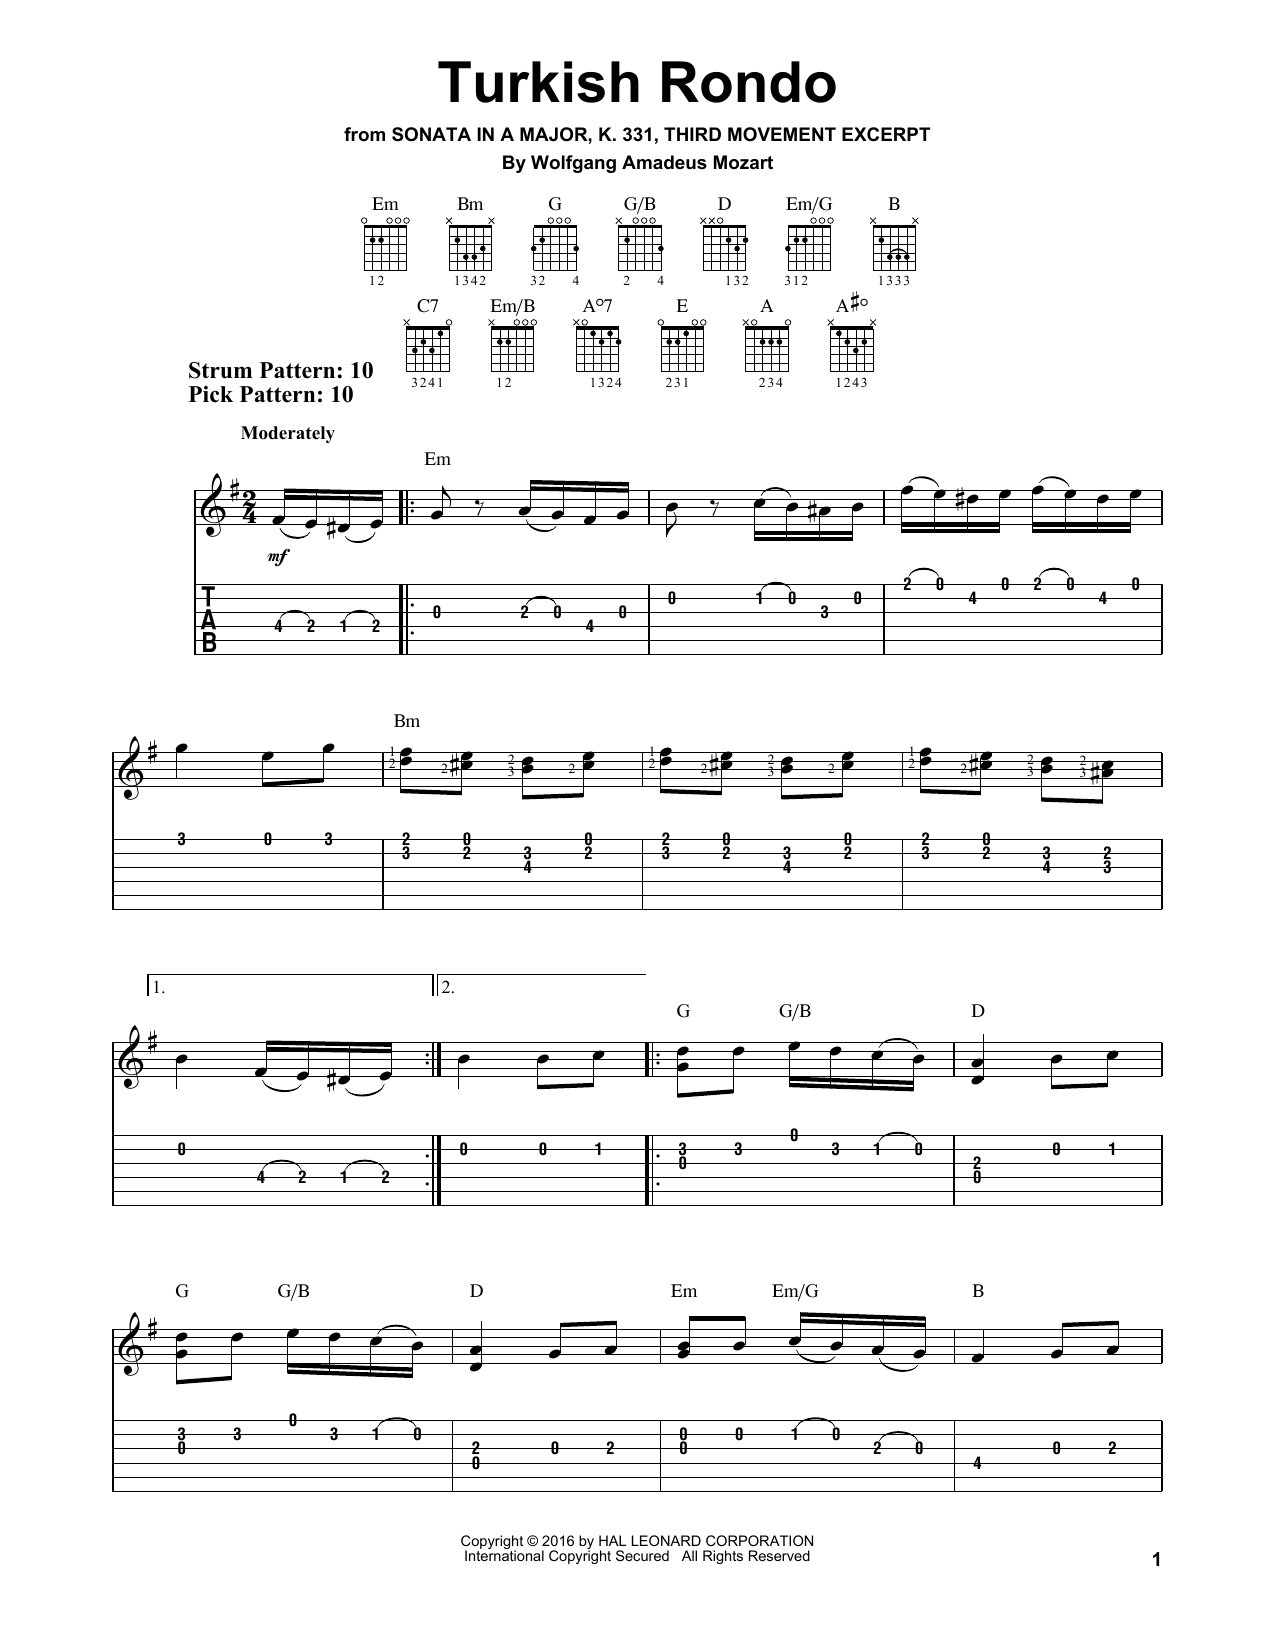 Wolfgang Amadeus Mozart Turkish Rondo Sheet Music Notes & Chords for Easy Guitar Tab - Download or Print PDF